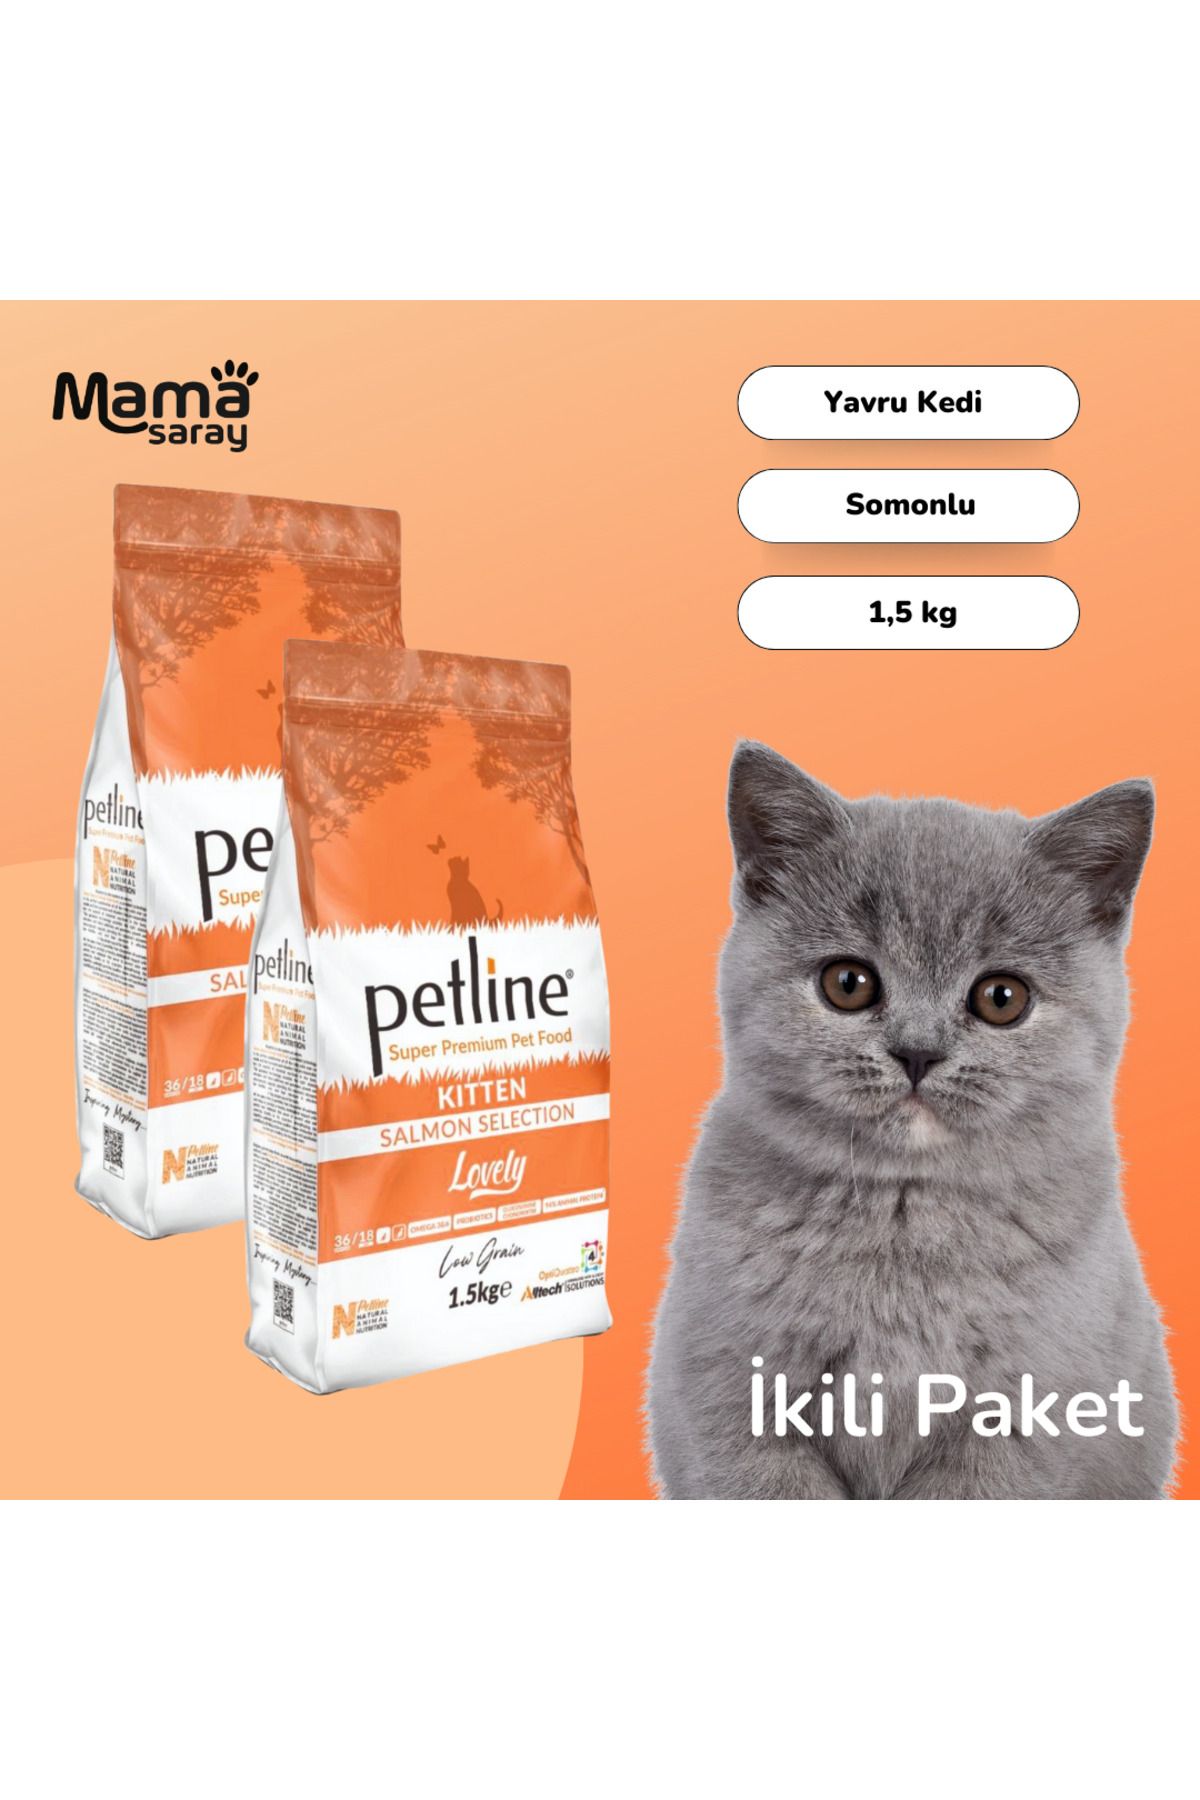 Petline S. P. Yavru Kedi Maması Kitten Somonlu 1.5 Kg (lovely) Ikili Paket